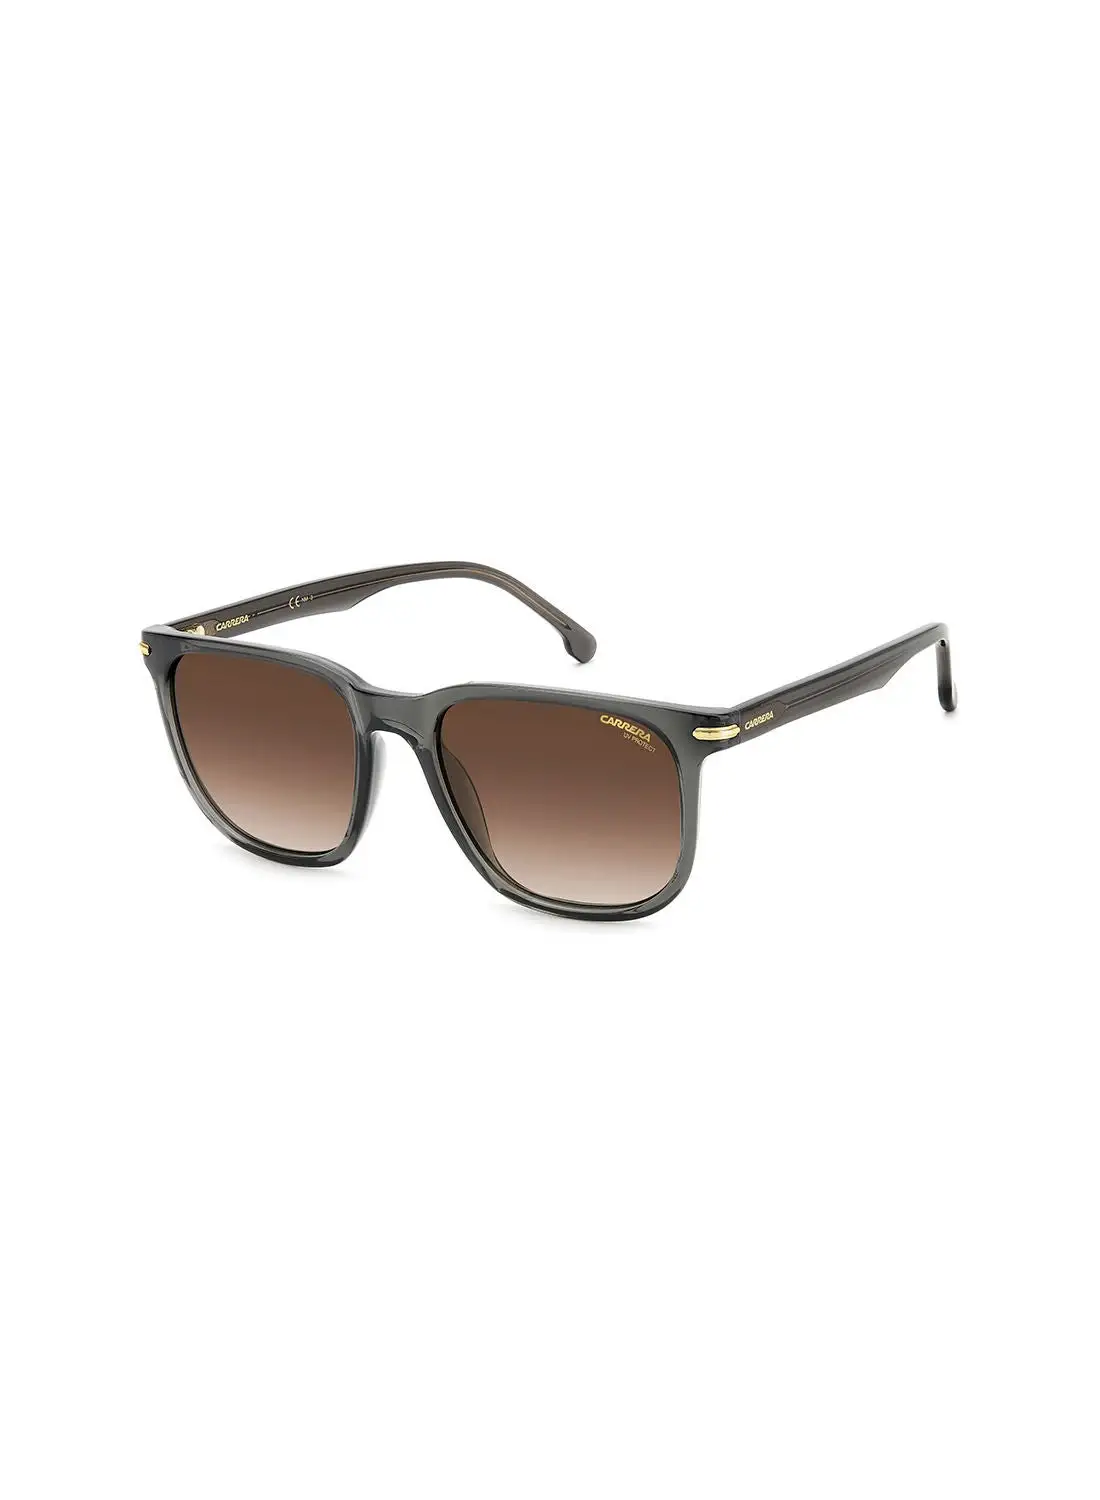 Carrera Unisex UV Protection Square Sunglasses - Carrera 300/S Grey 54 - Lens Size: 54 Mm